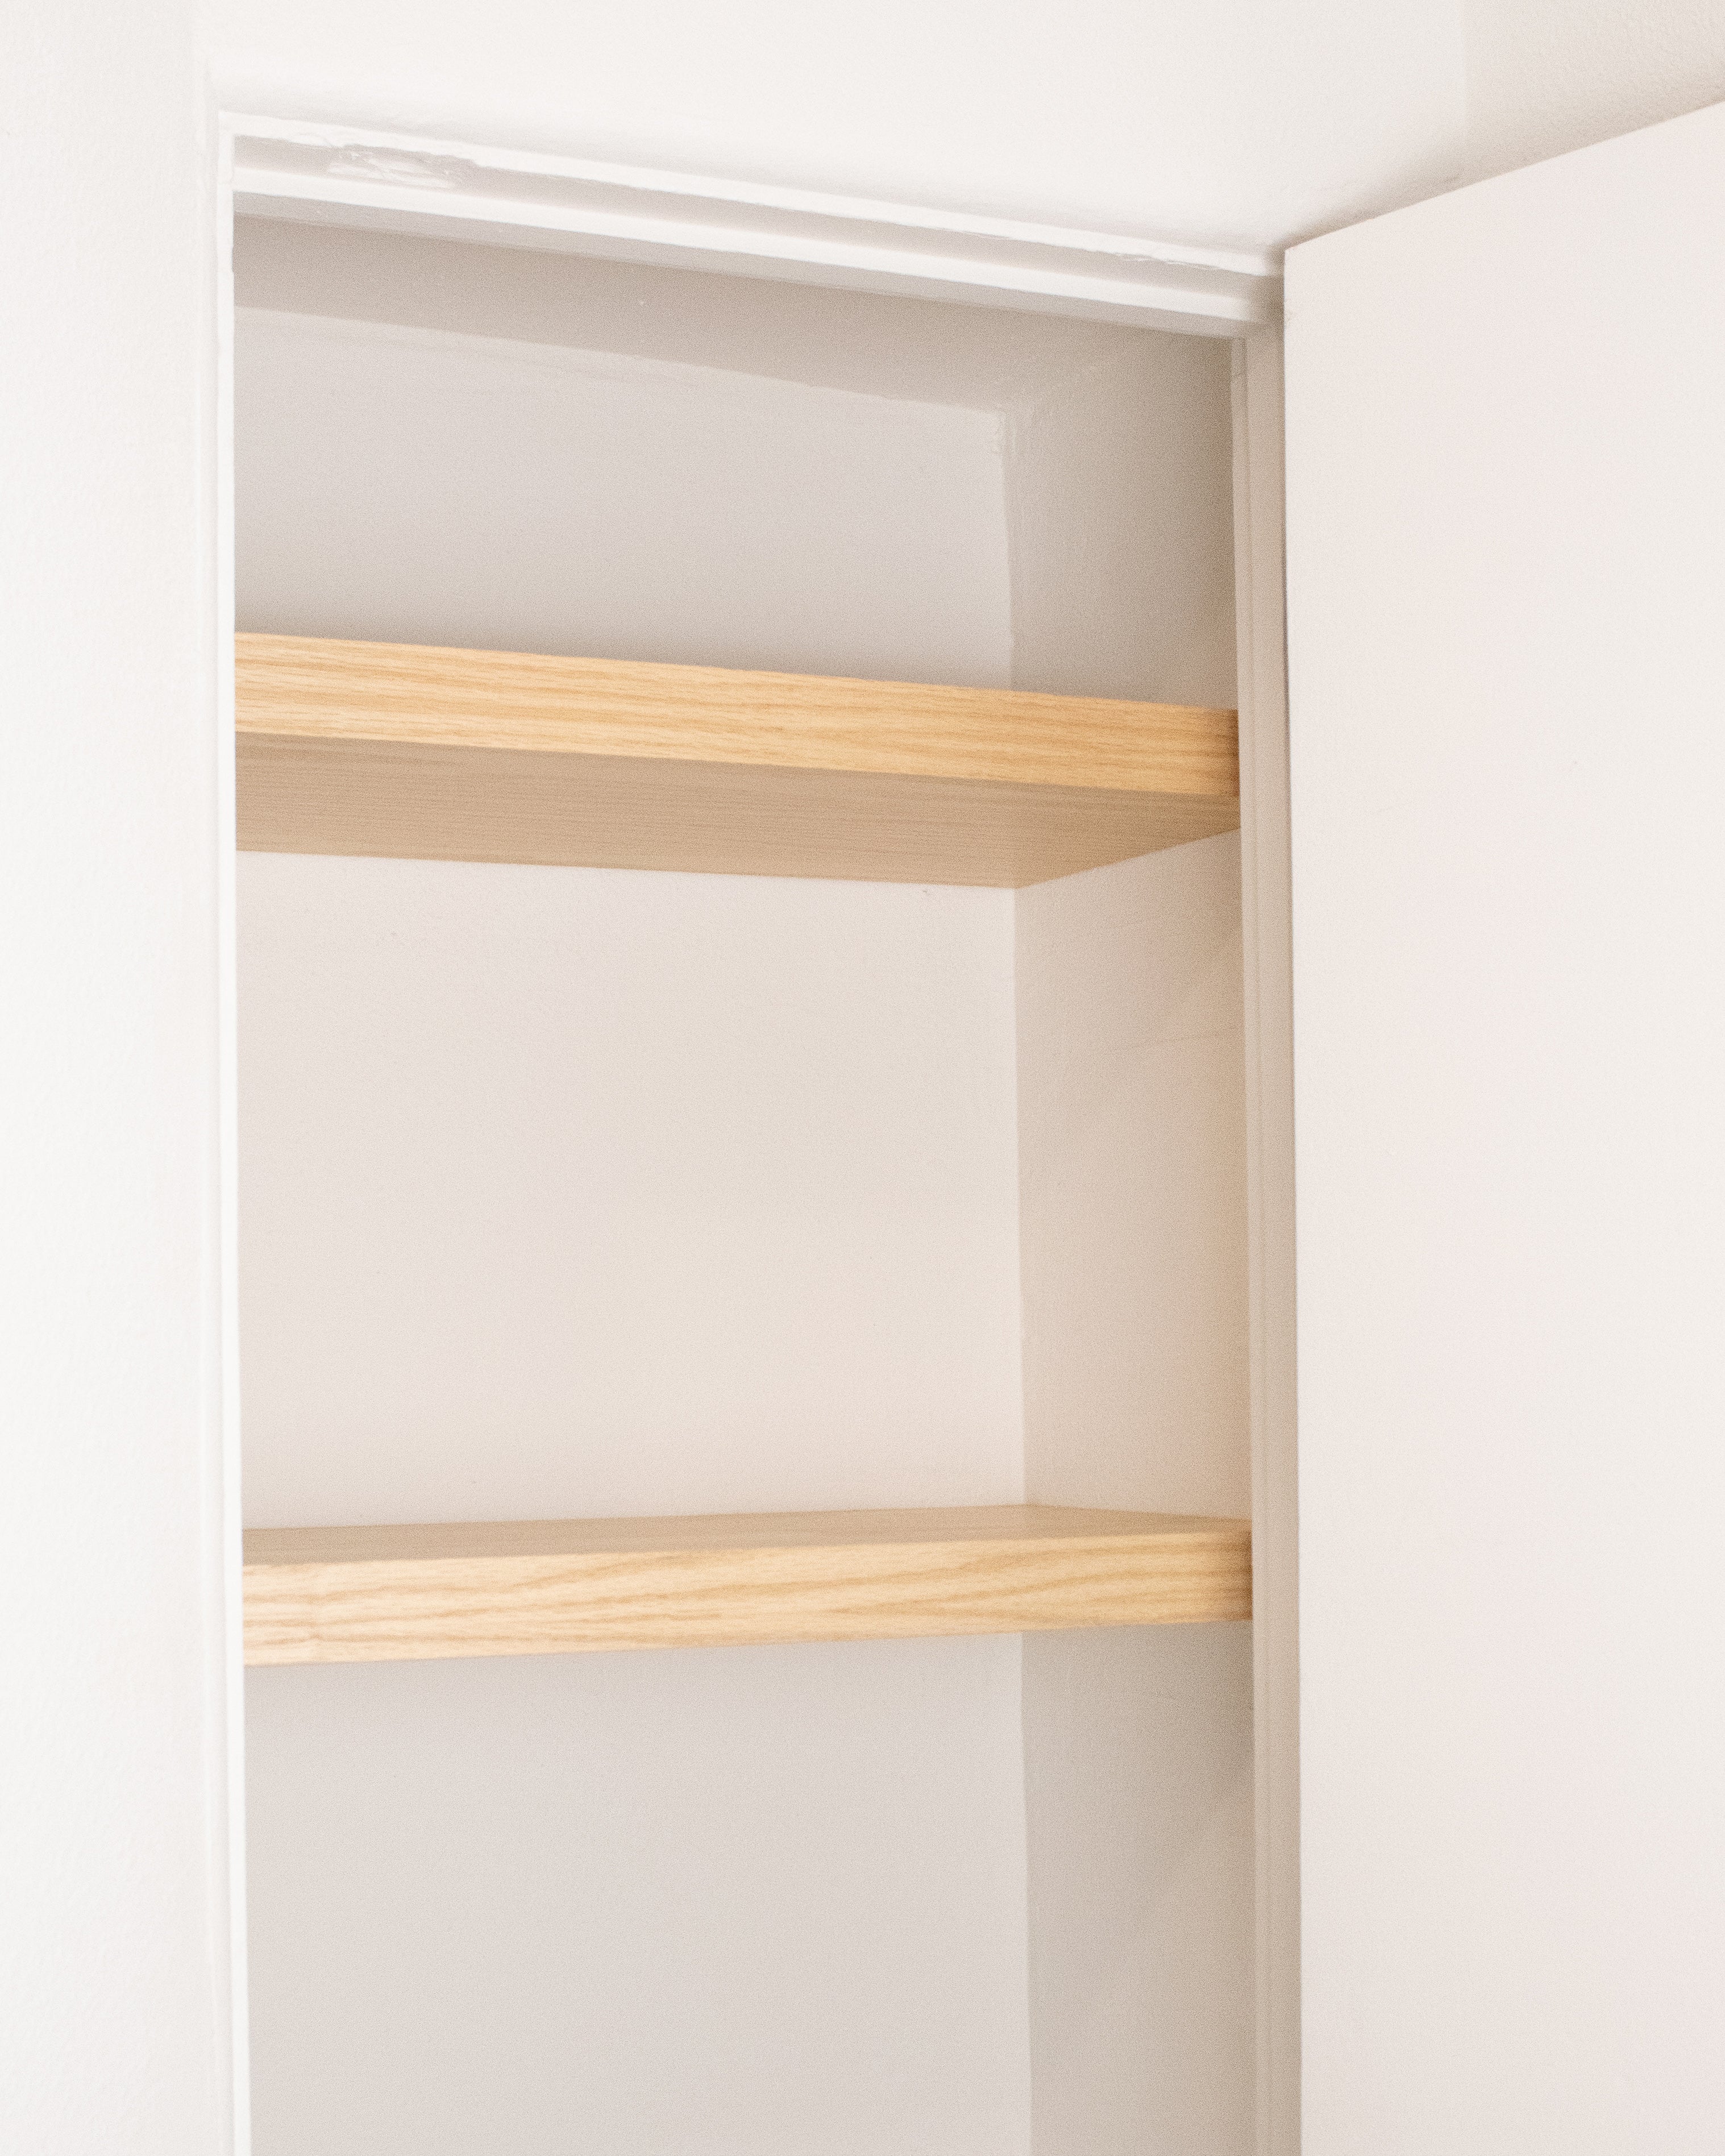 Cherry 4.1-6" thick Cabinet Top / Slab Shelf